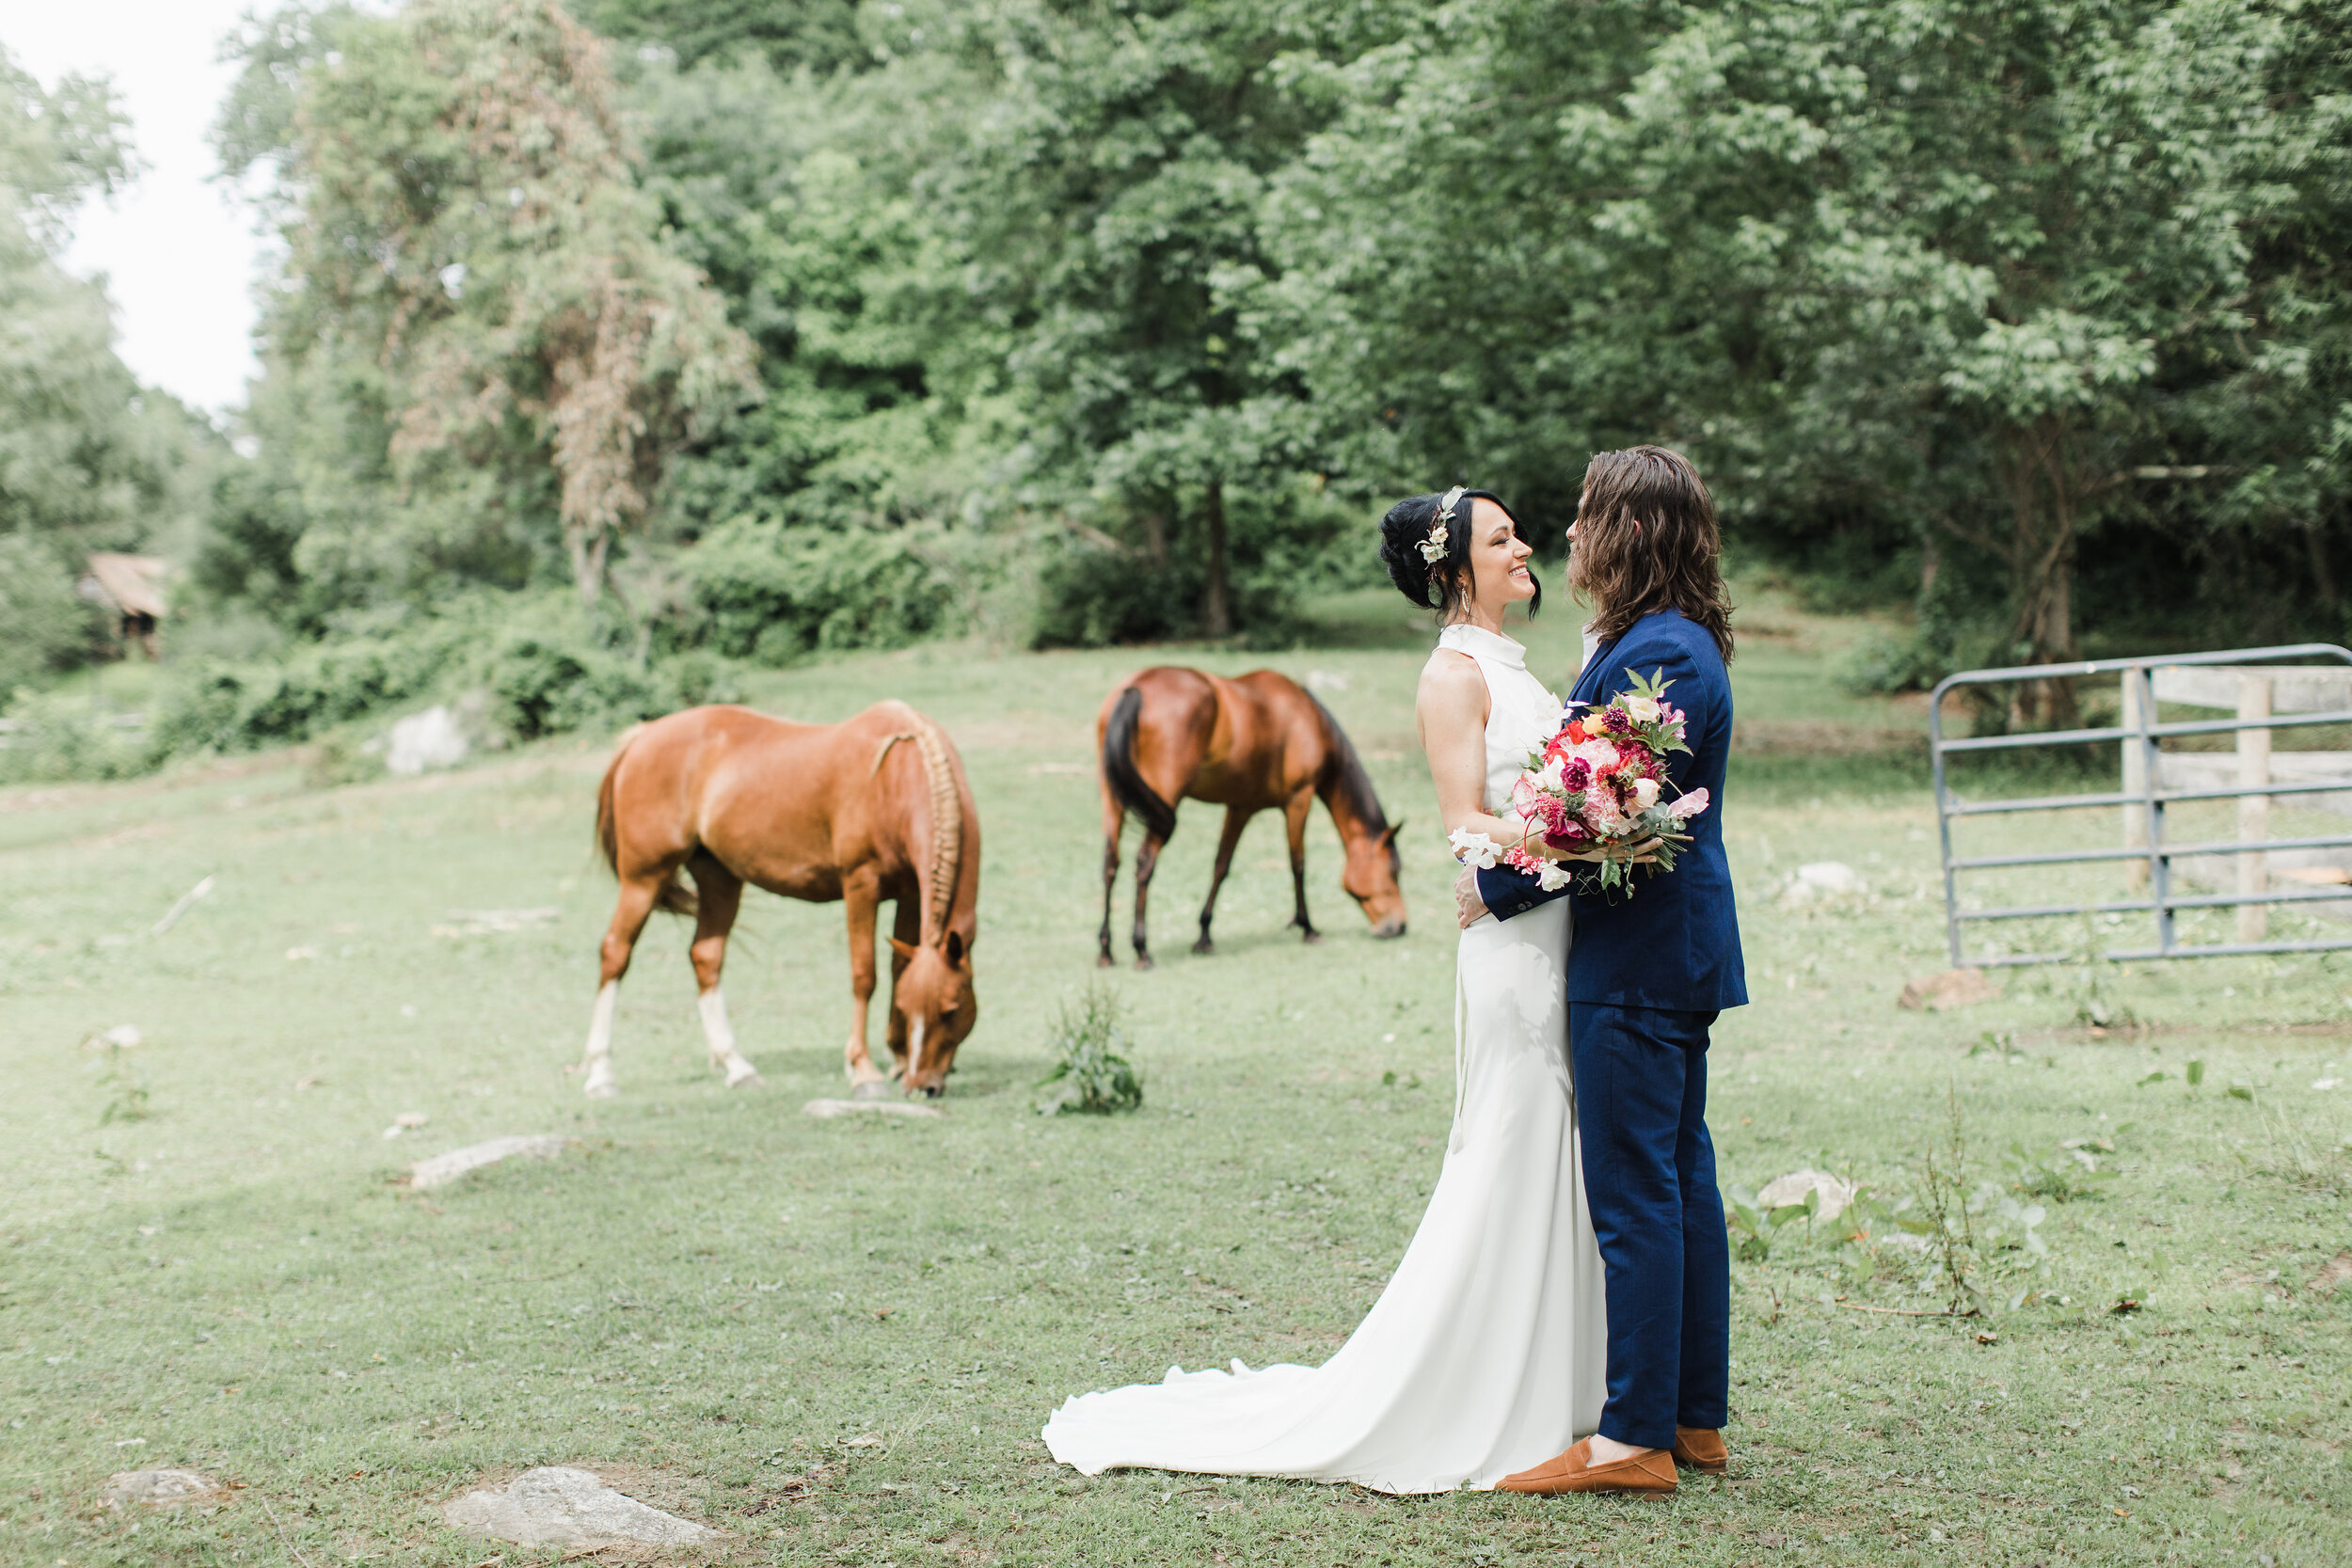 The Spirit Horse Farm Micro Wedding in Kent, CT